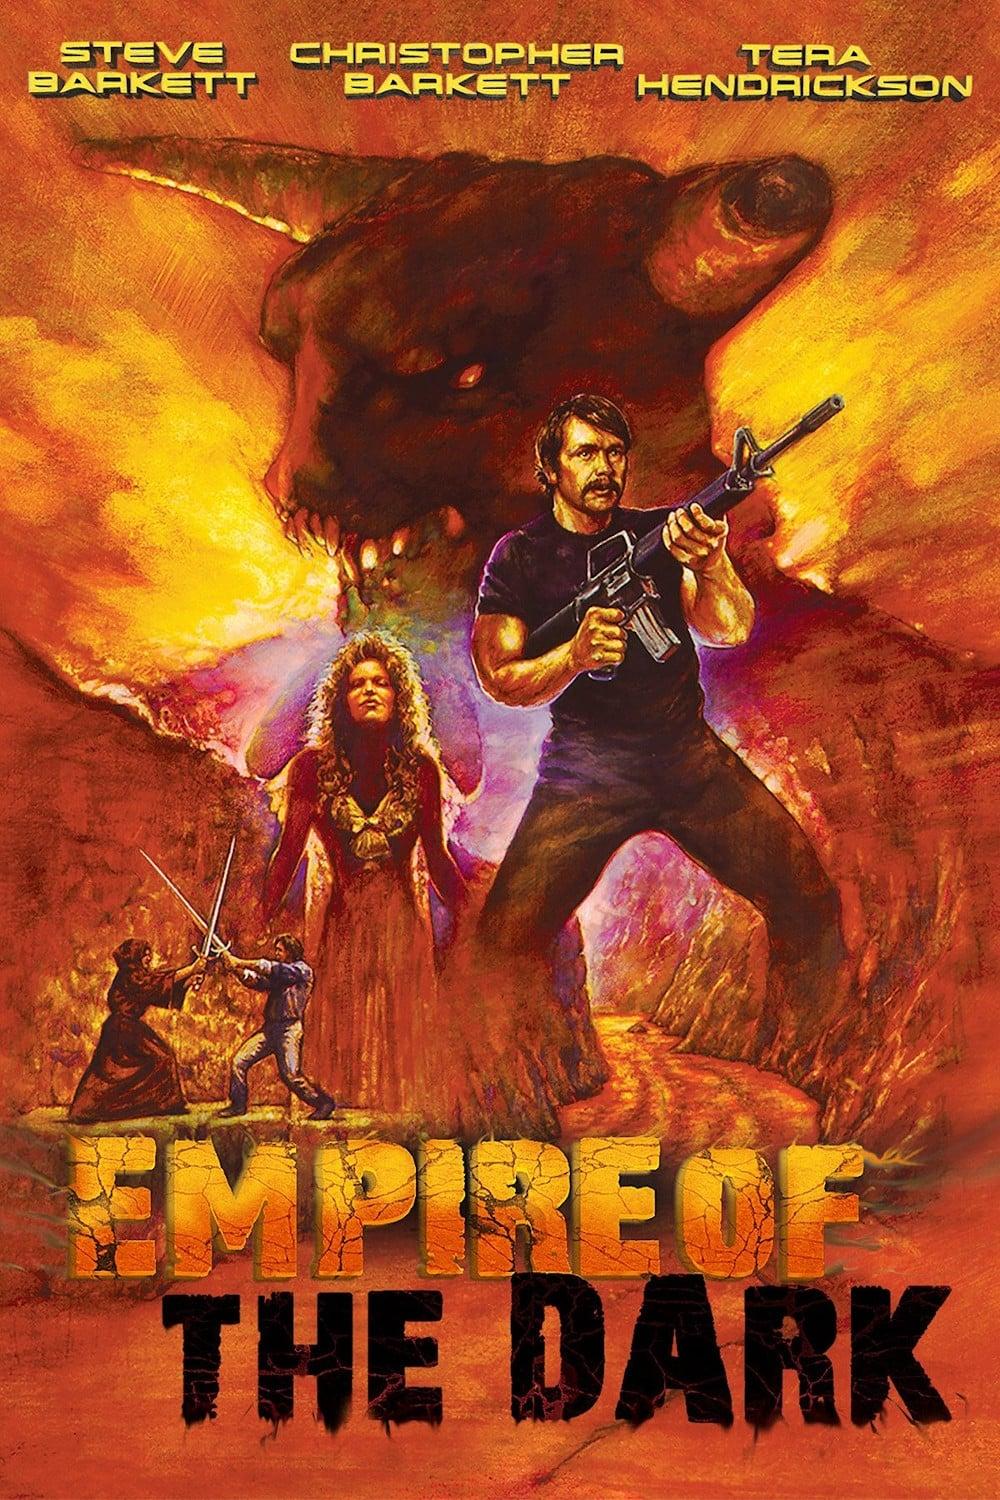 Empire of the Dark poster